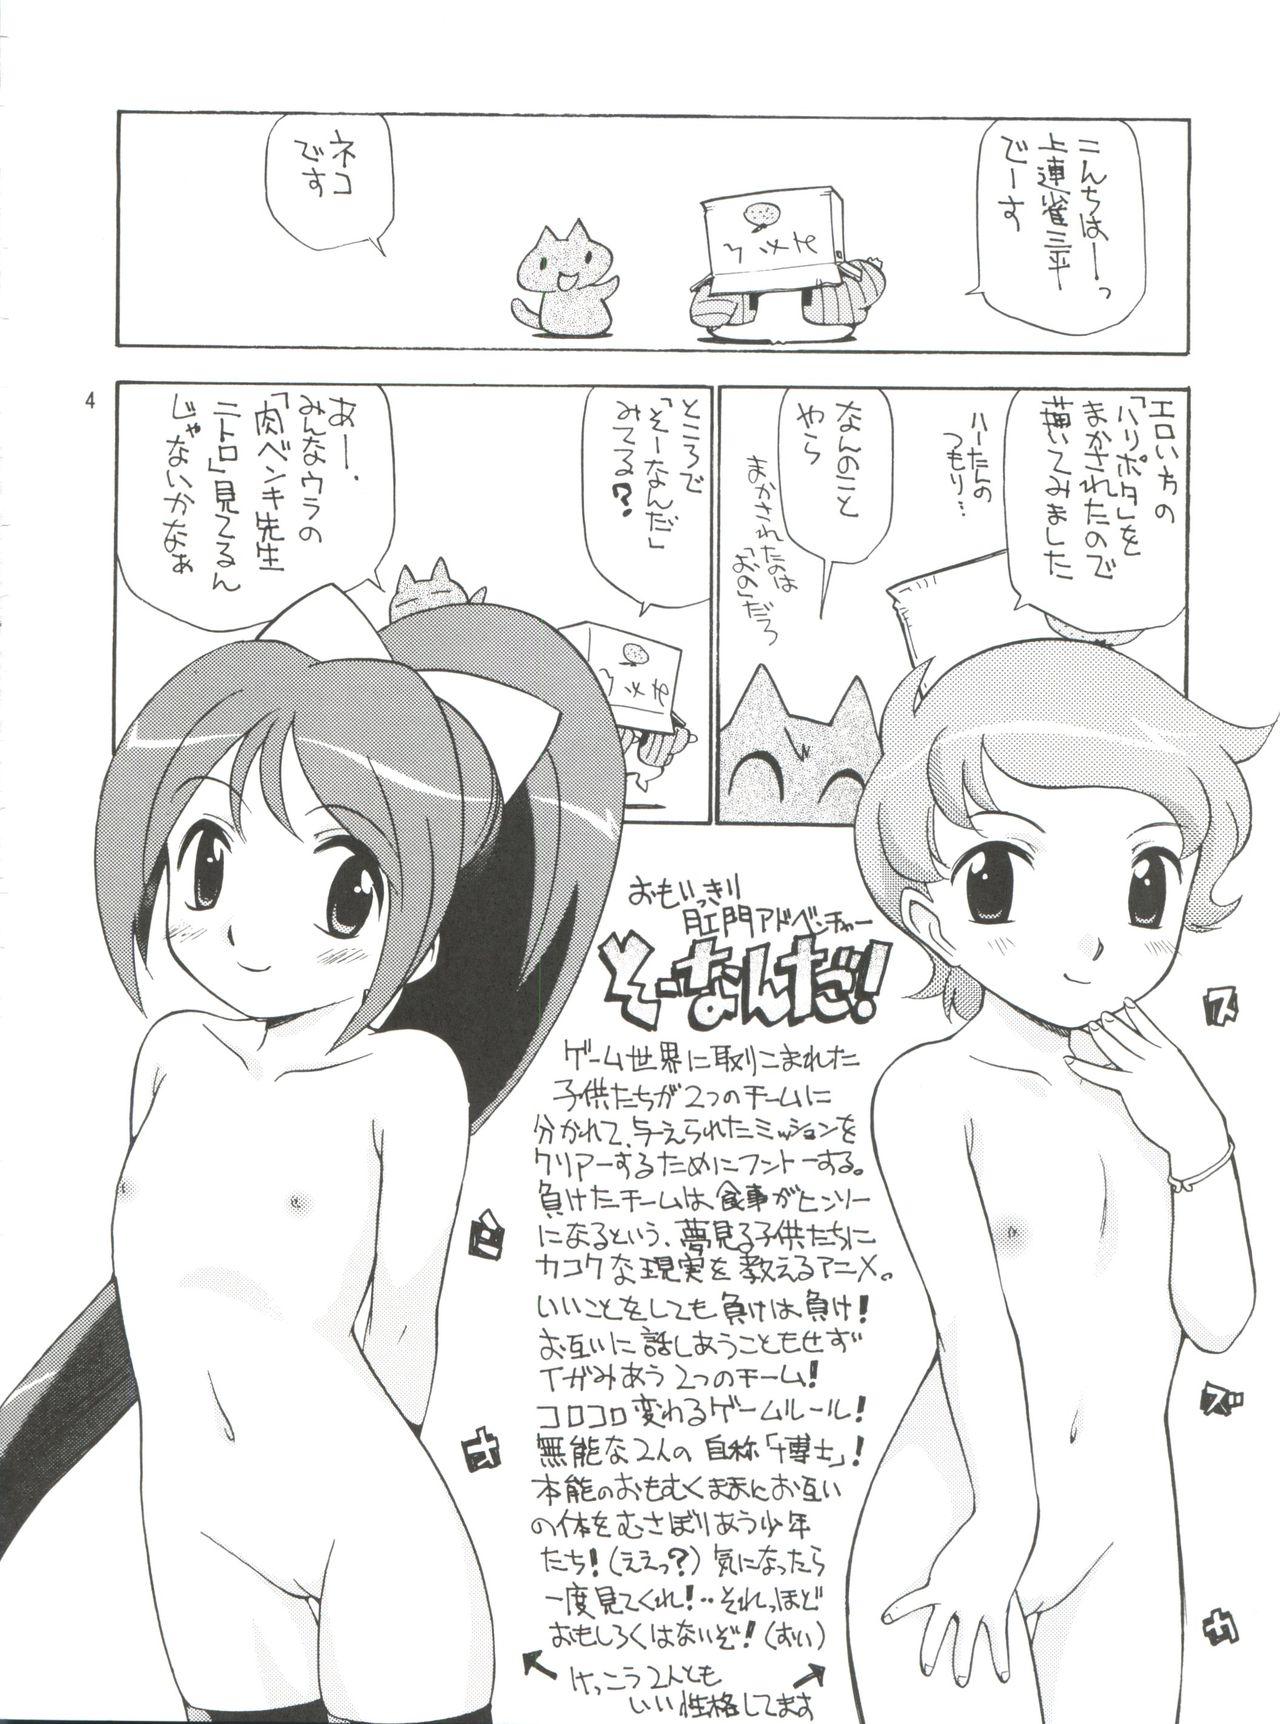 Bear Omoikikiri Chijo Adventure - Tokyo mew mew Omoikkiri kagaku adventure sou nanda Bomberman jetters Bailando - Page 4